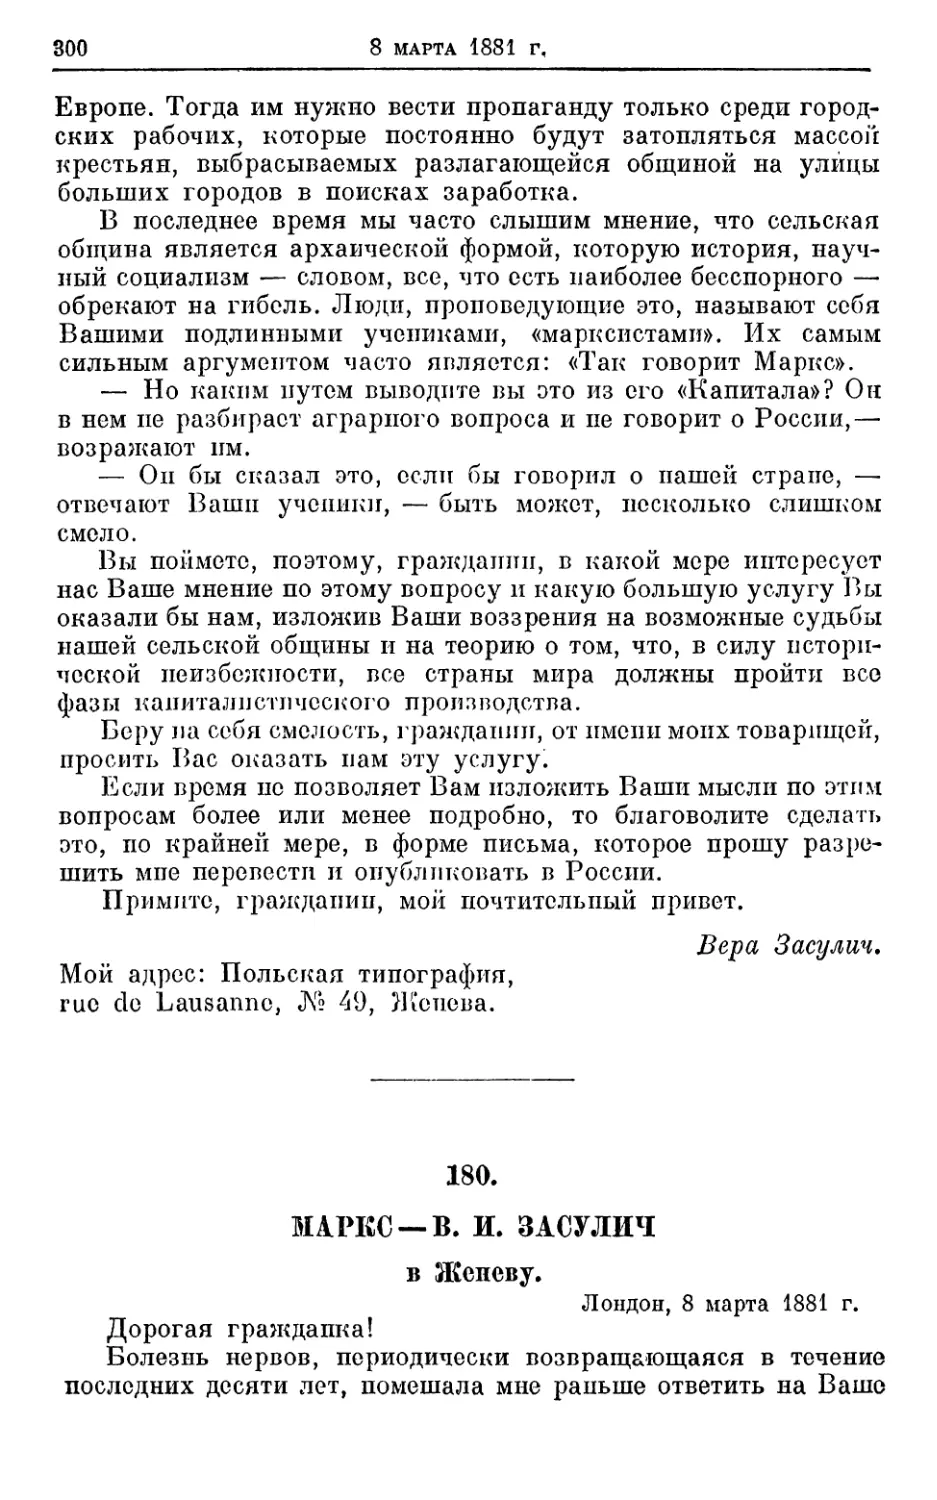 180. Маркс — В. И. Засулич, 8 марта 1881г